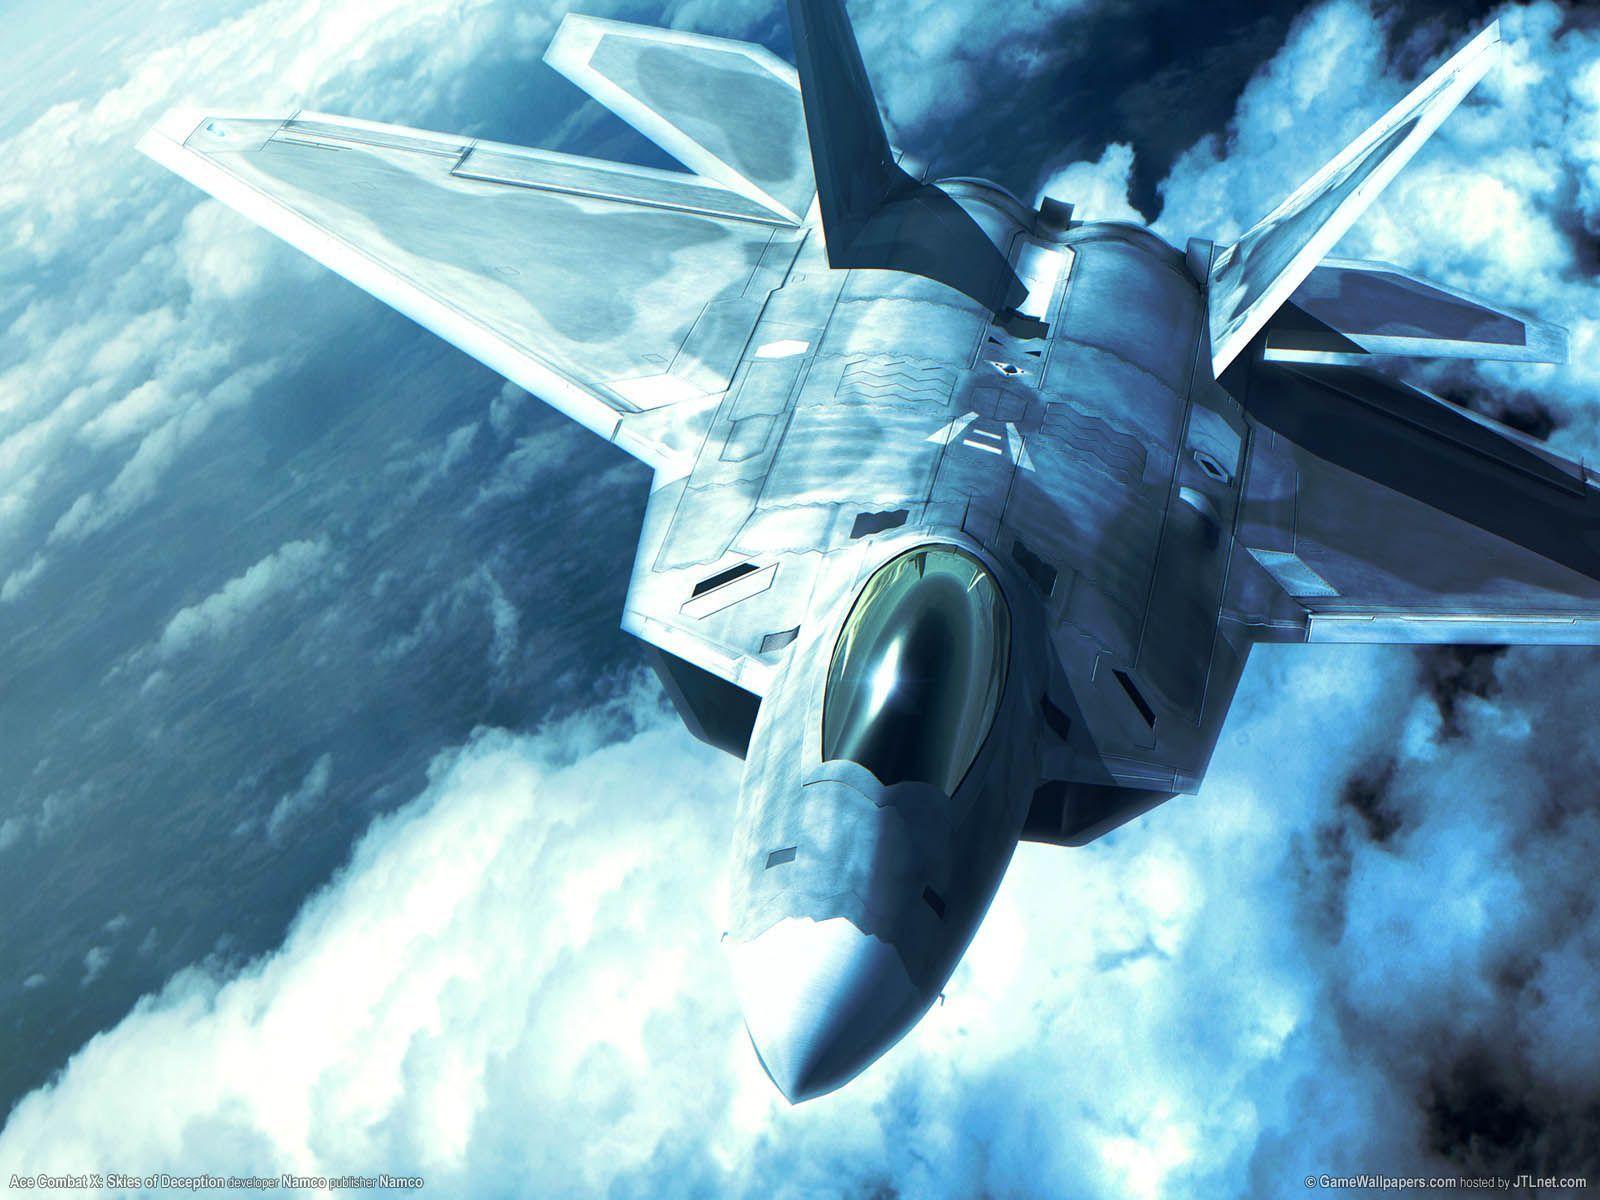 Ace Combat X Skies Of Deception. HD Wallpaper Image